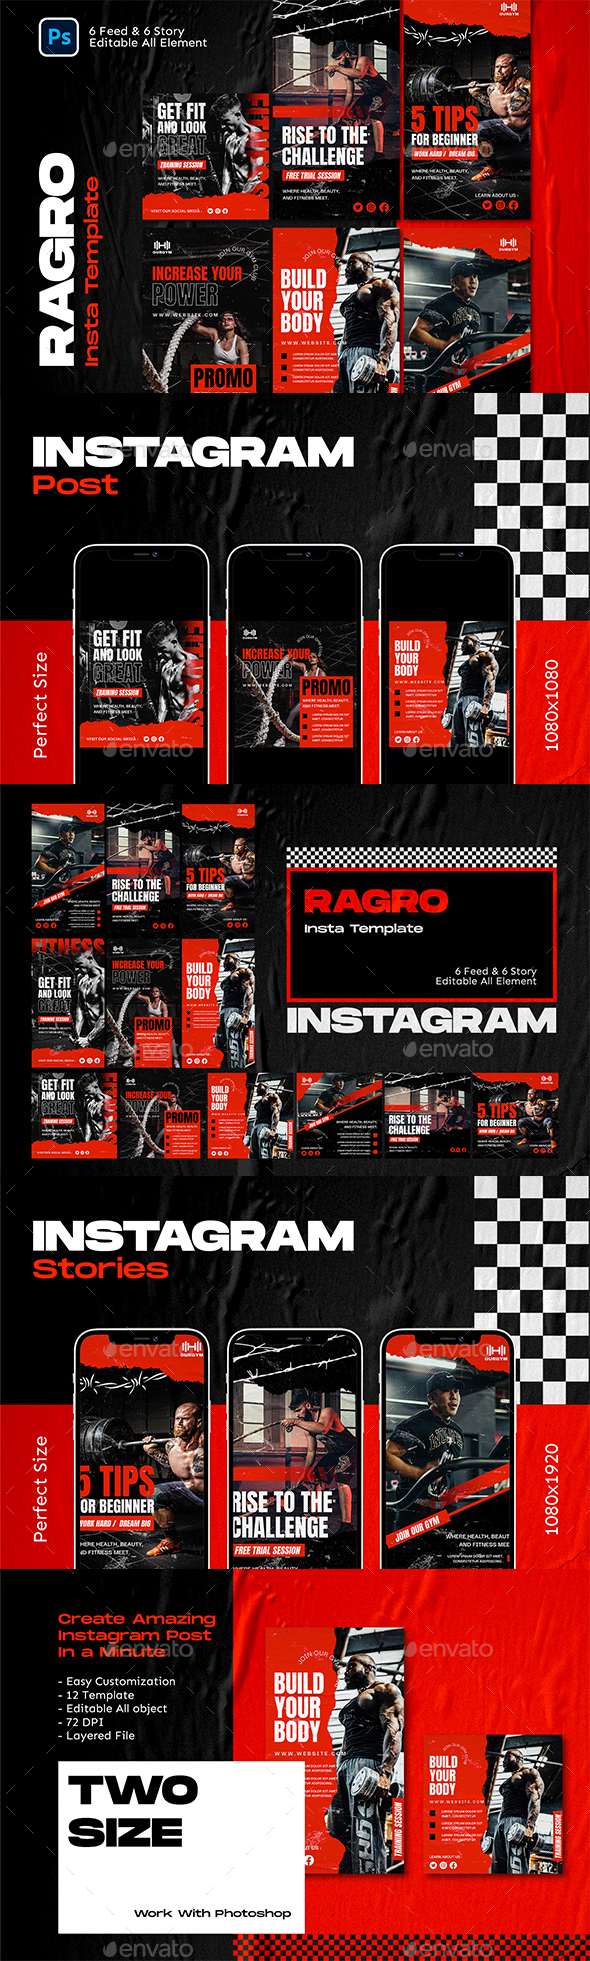 [DOWNLOAD]Ragro Gym Instagram Template